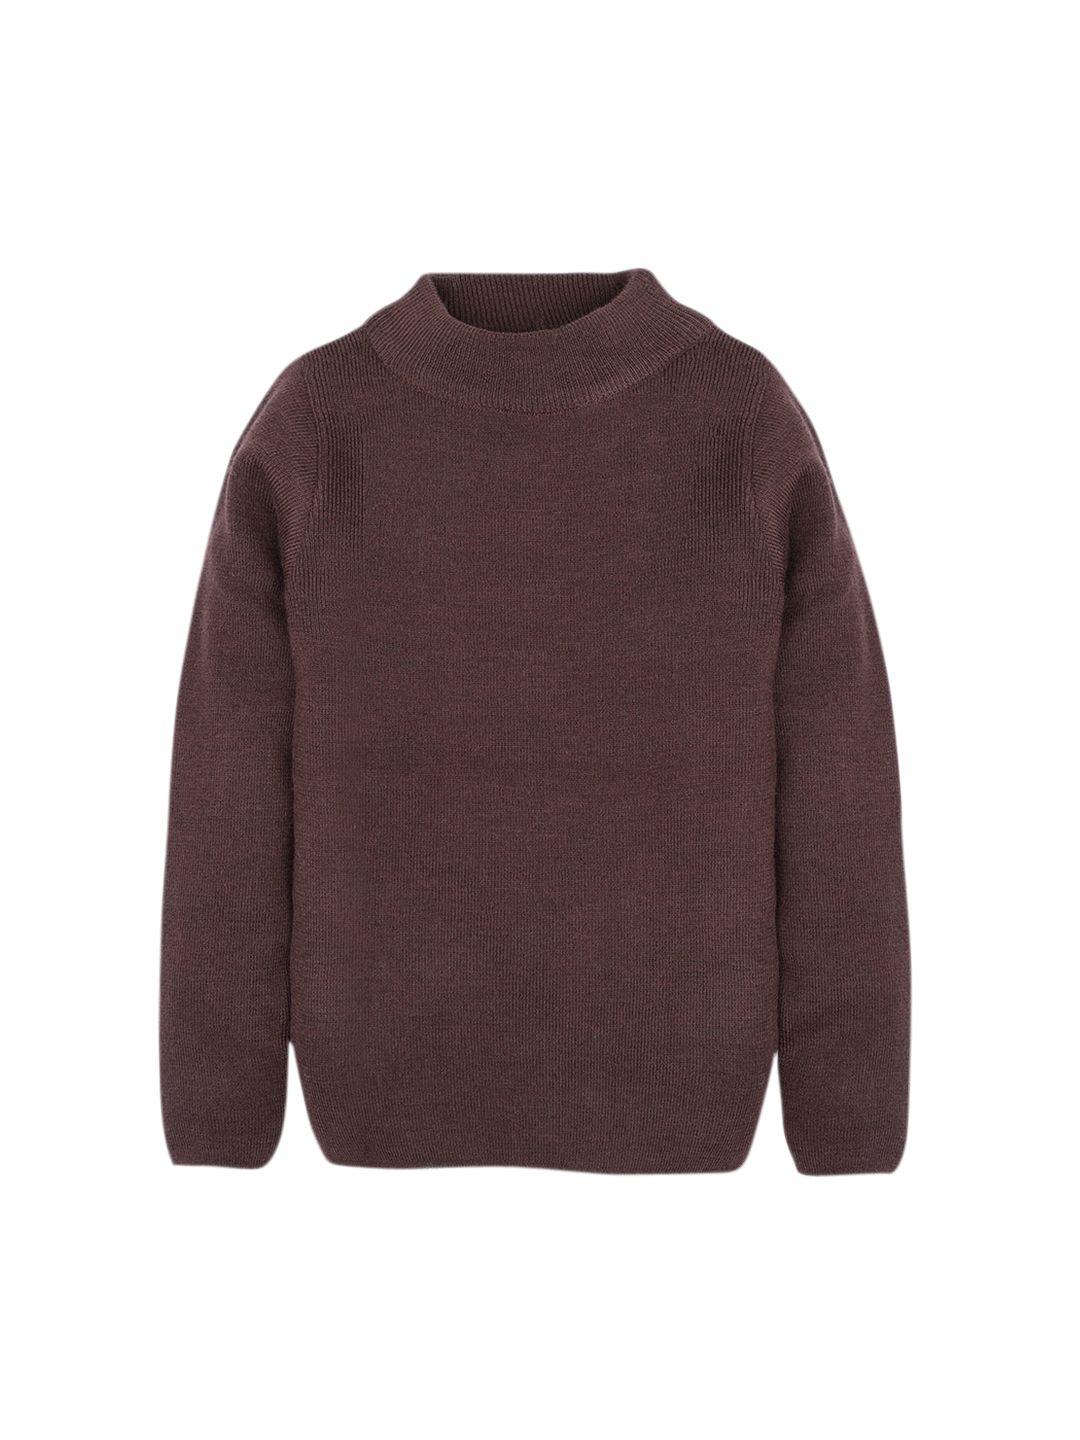 rvk unisex kids brown solid pullover sweater